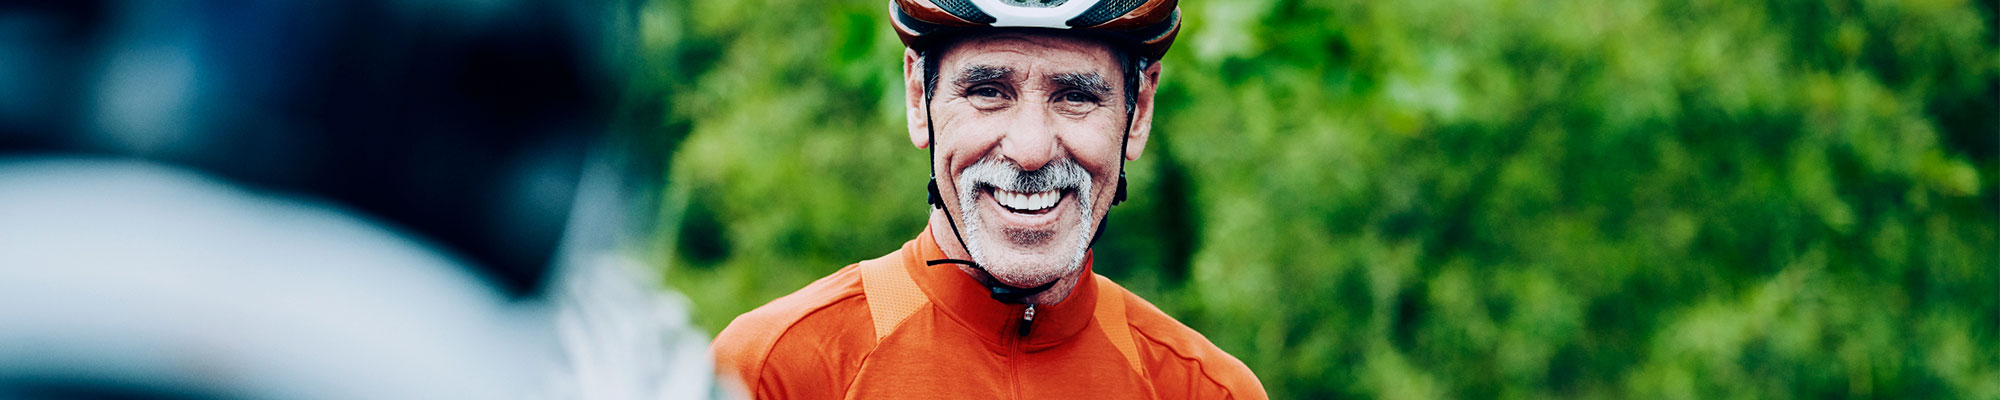 smiling man riding a bicycle